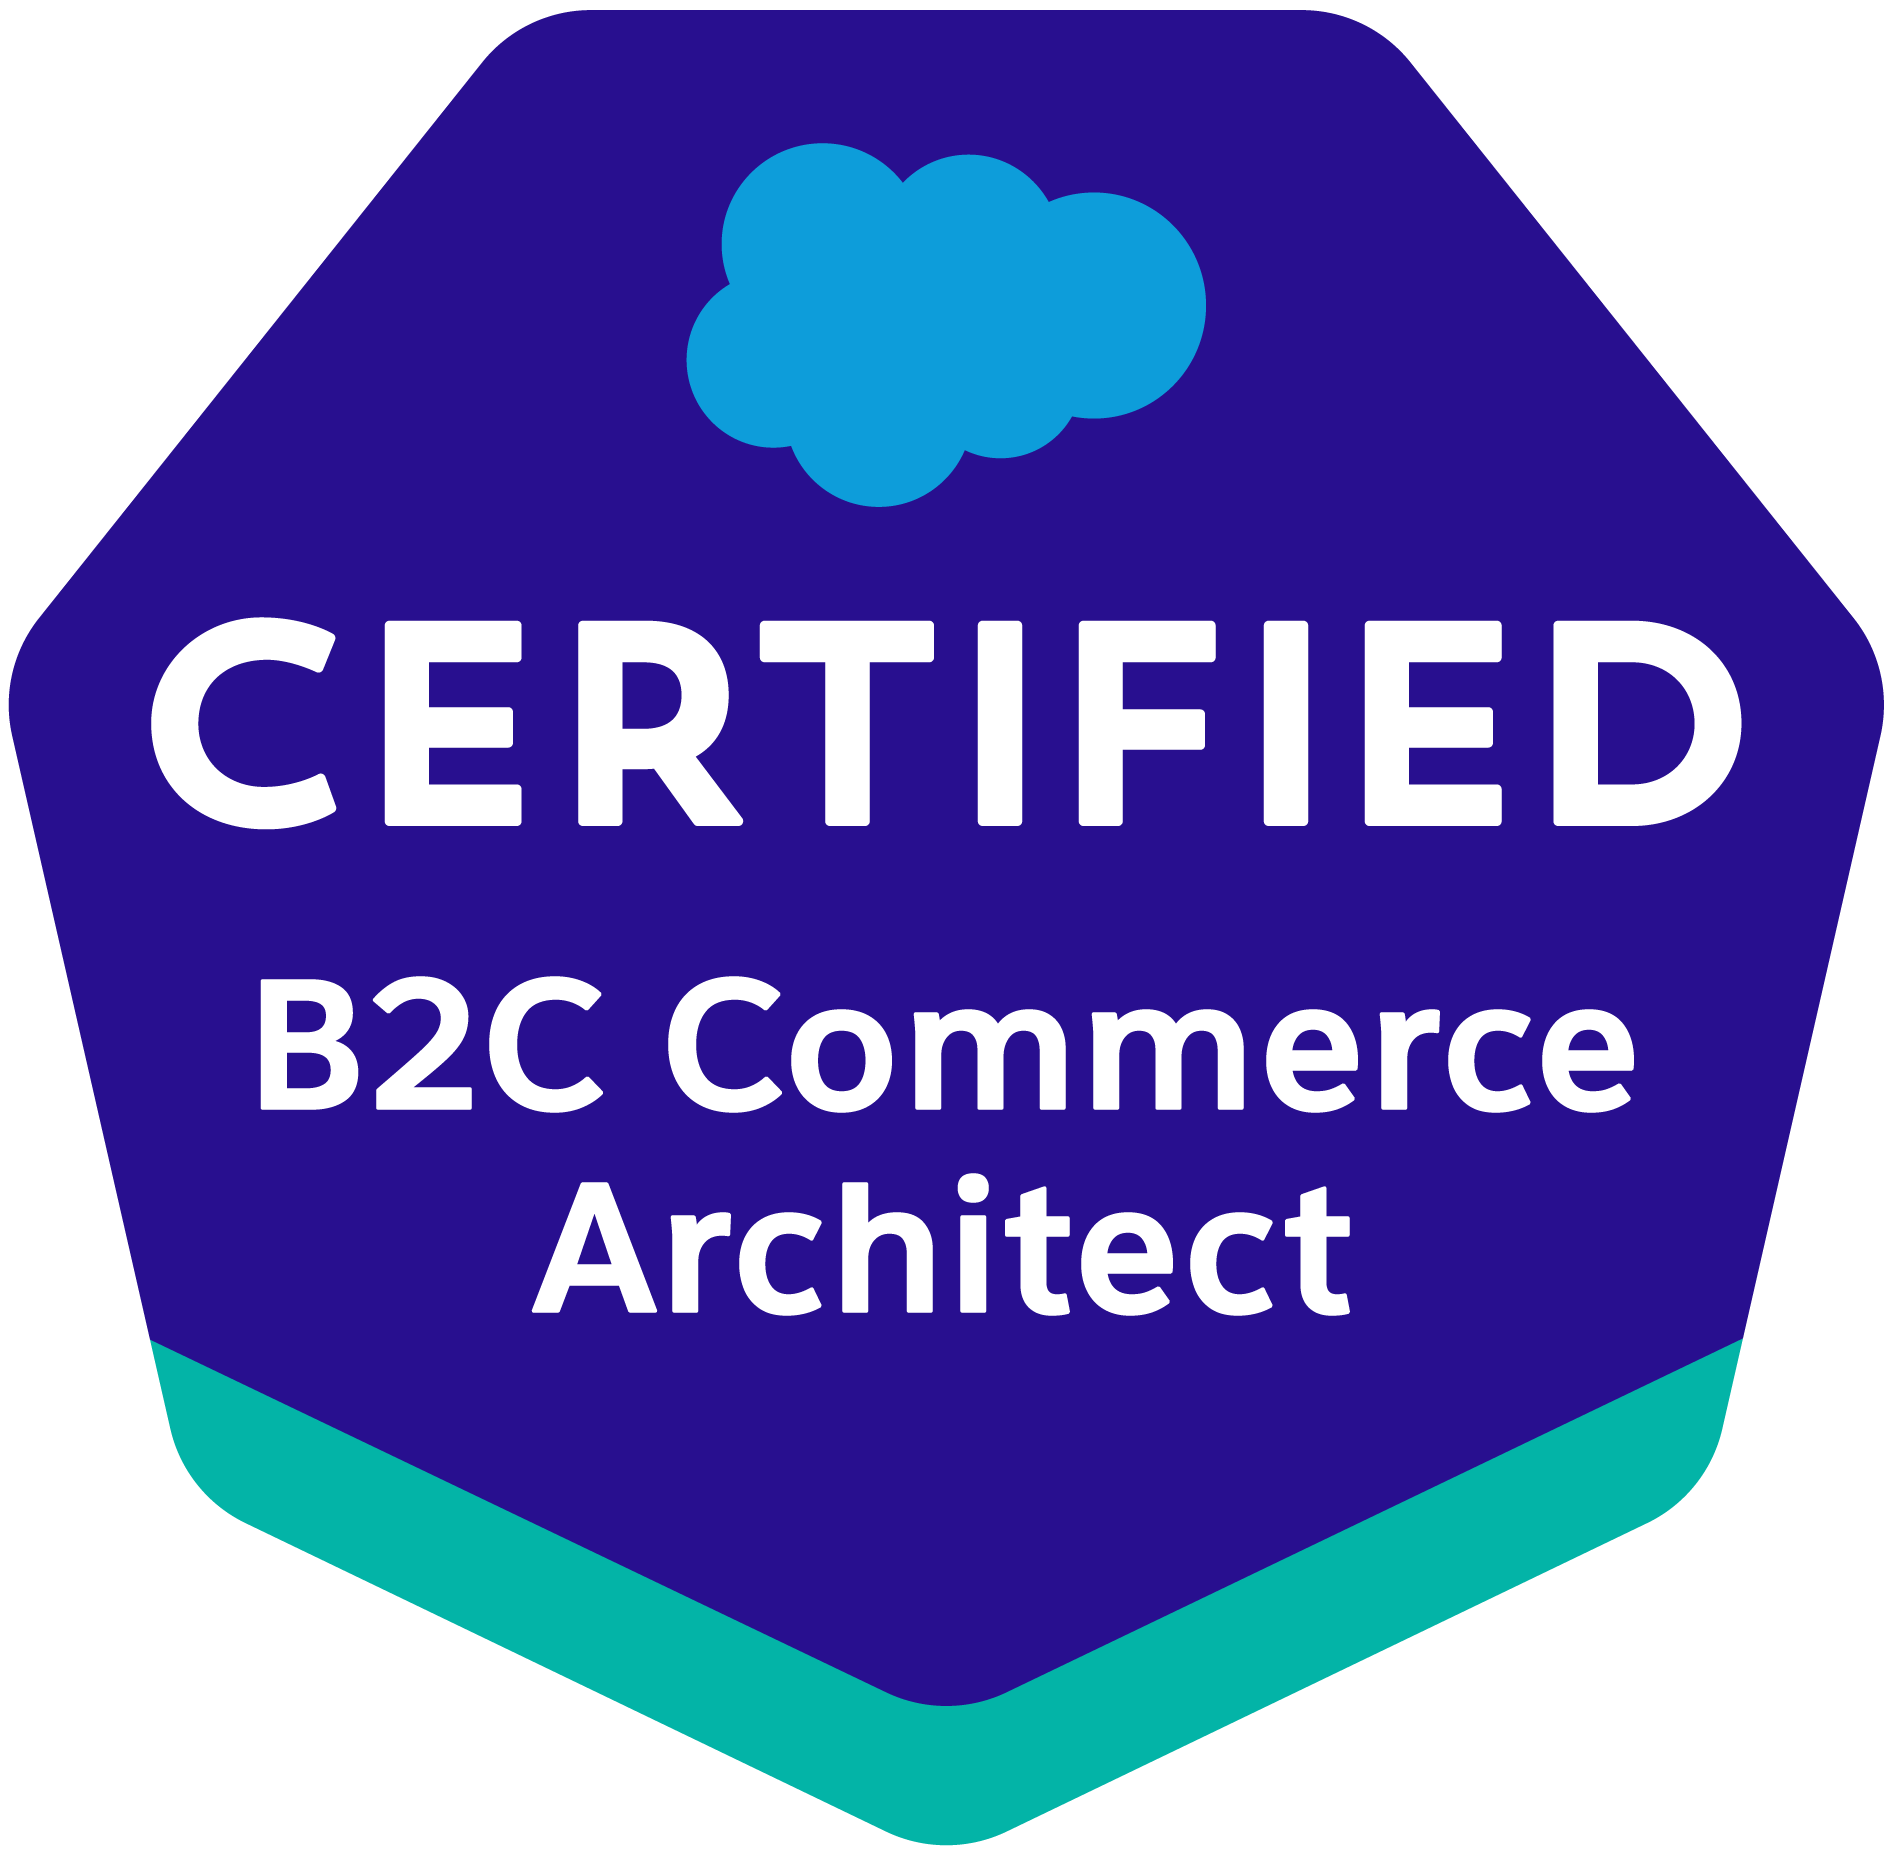 B2C Commerce Architect